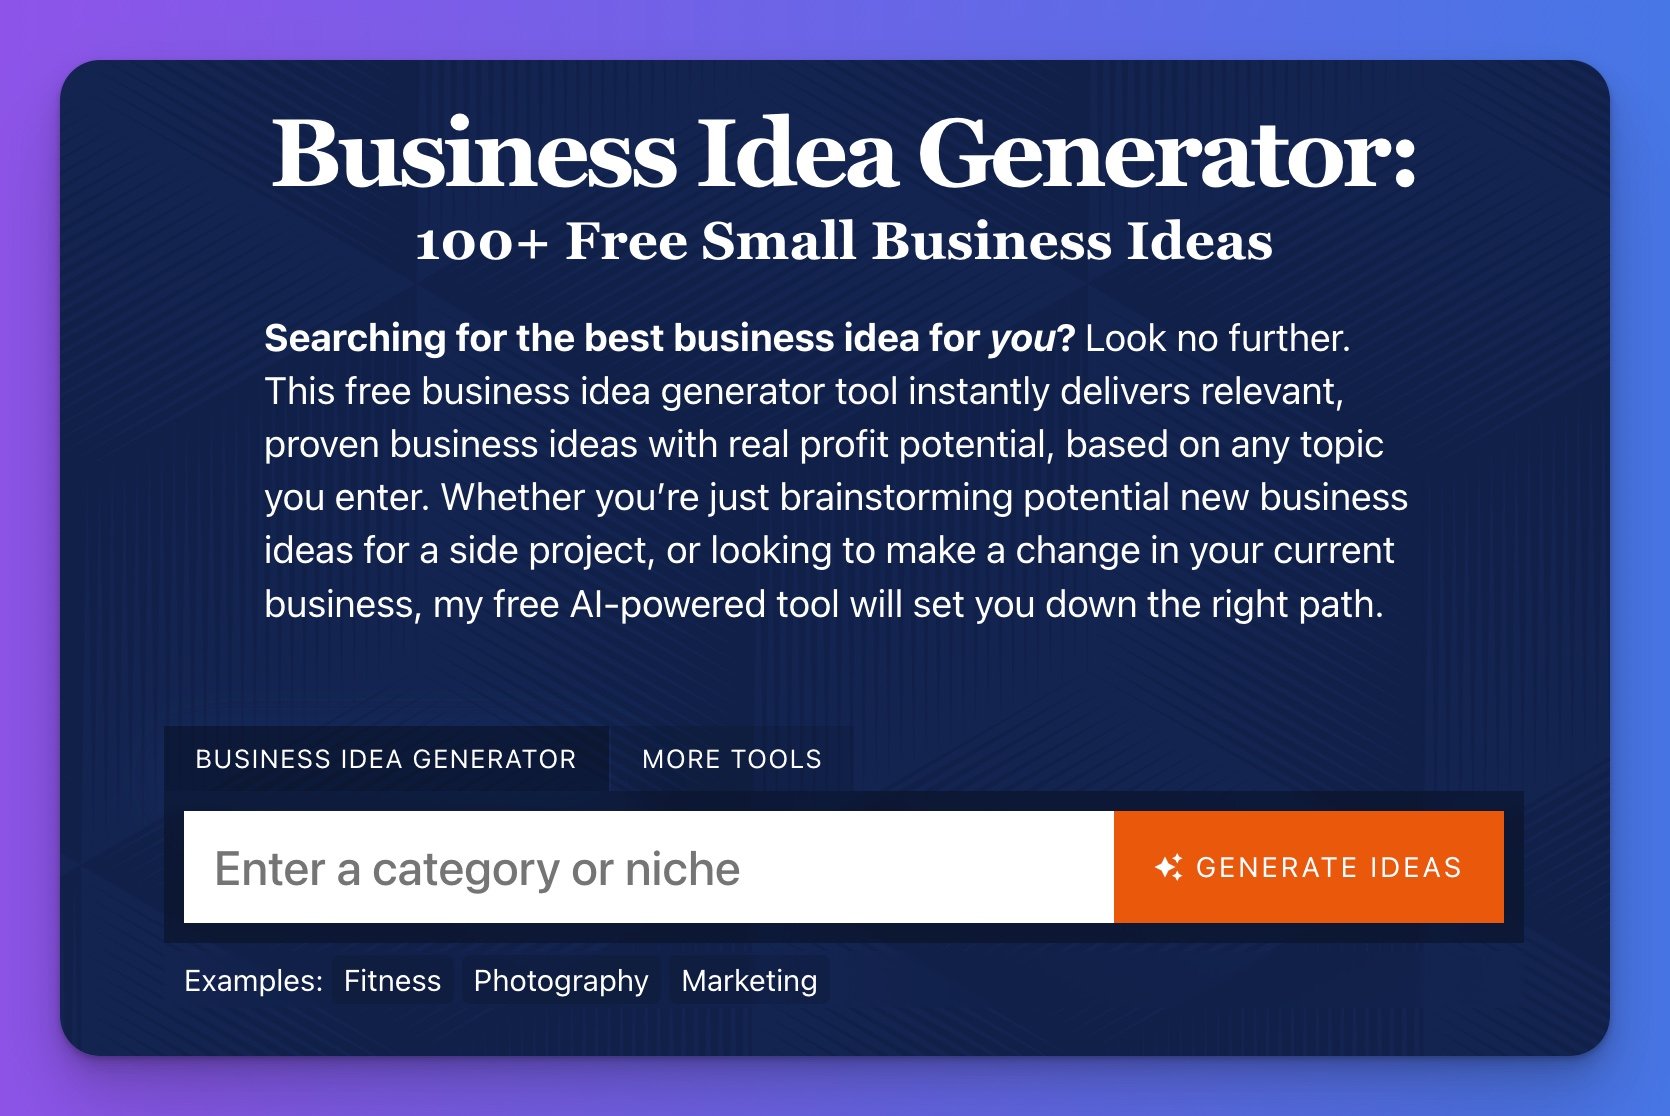 Business Idea Generator (Free AI Tool) by Ryan Robinson ryrob